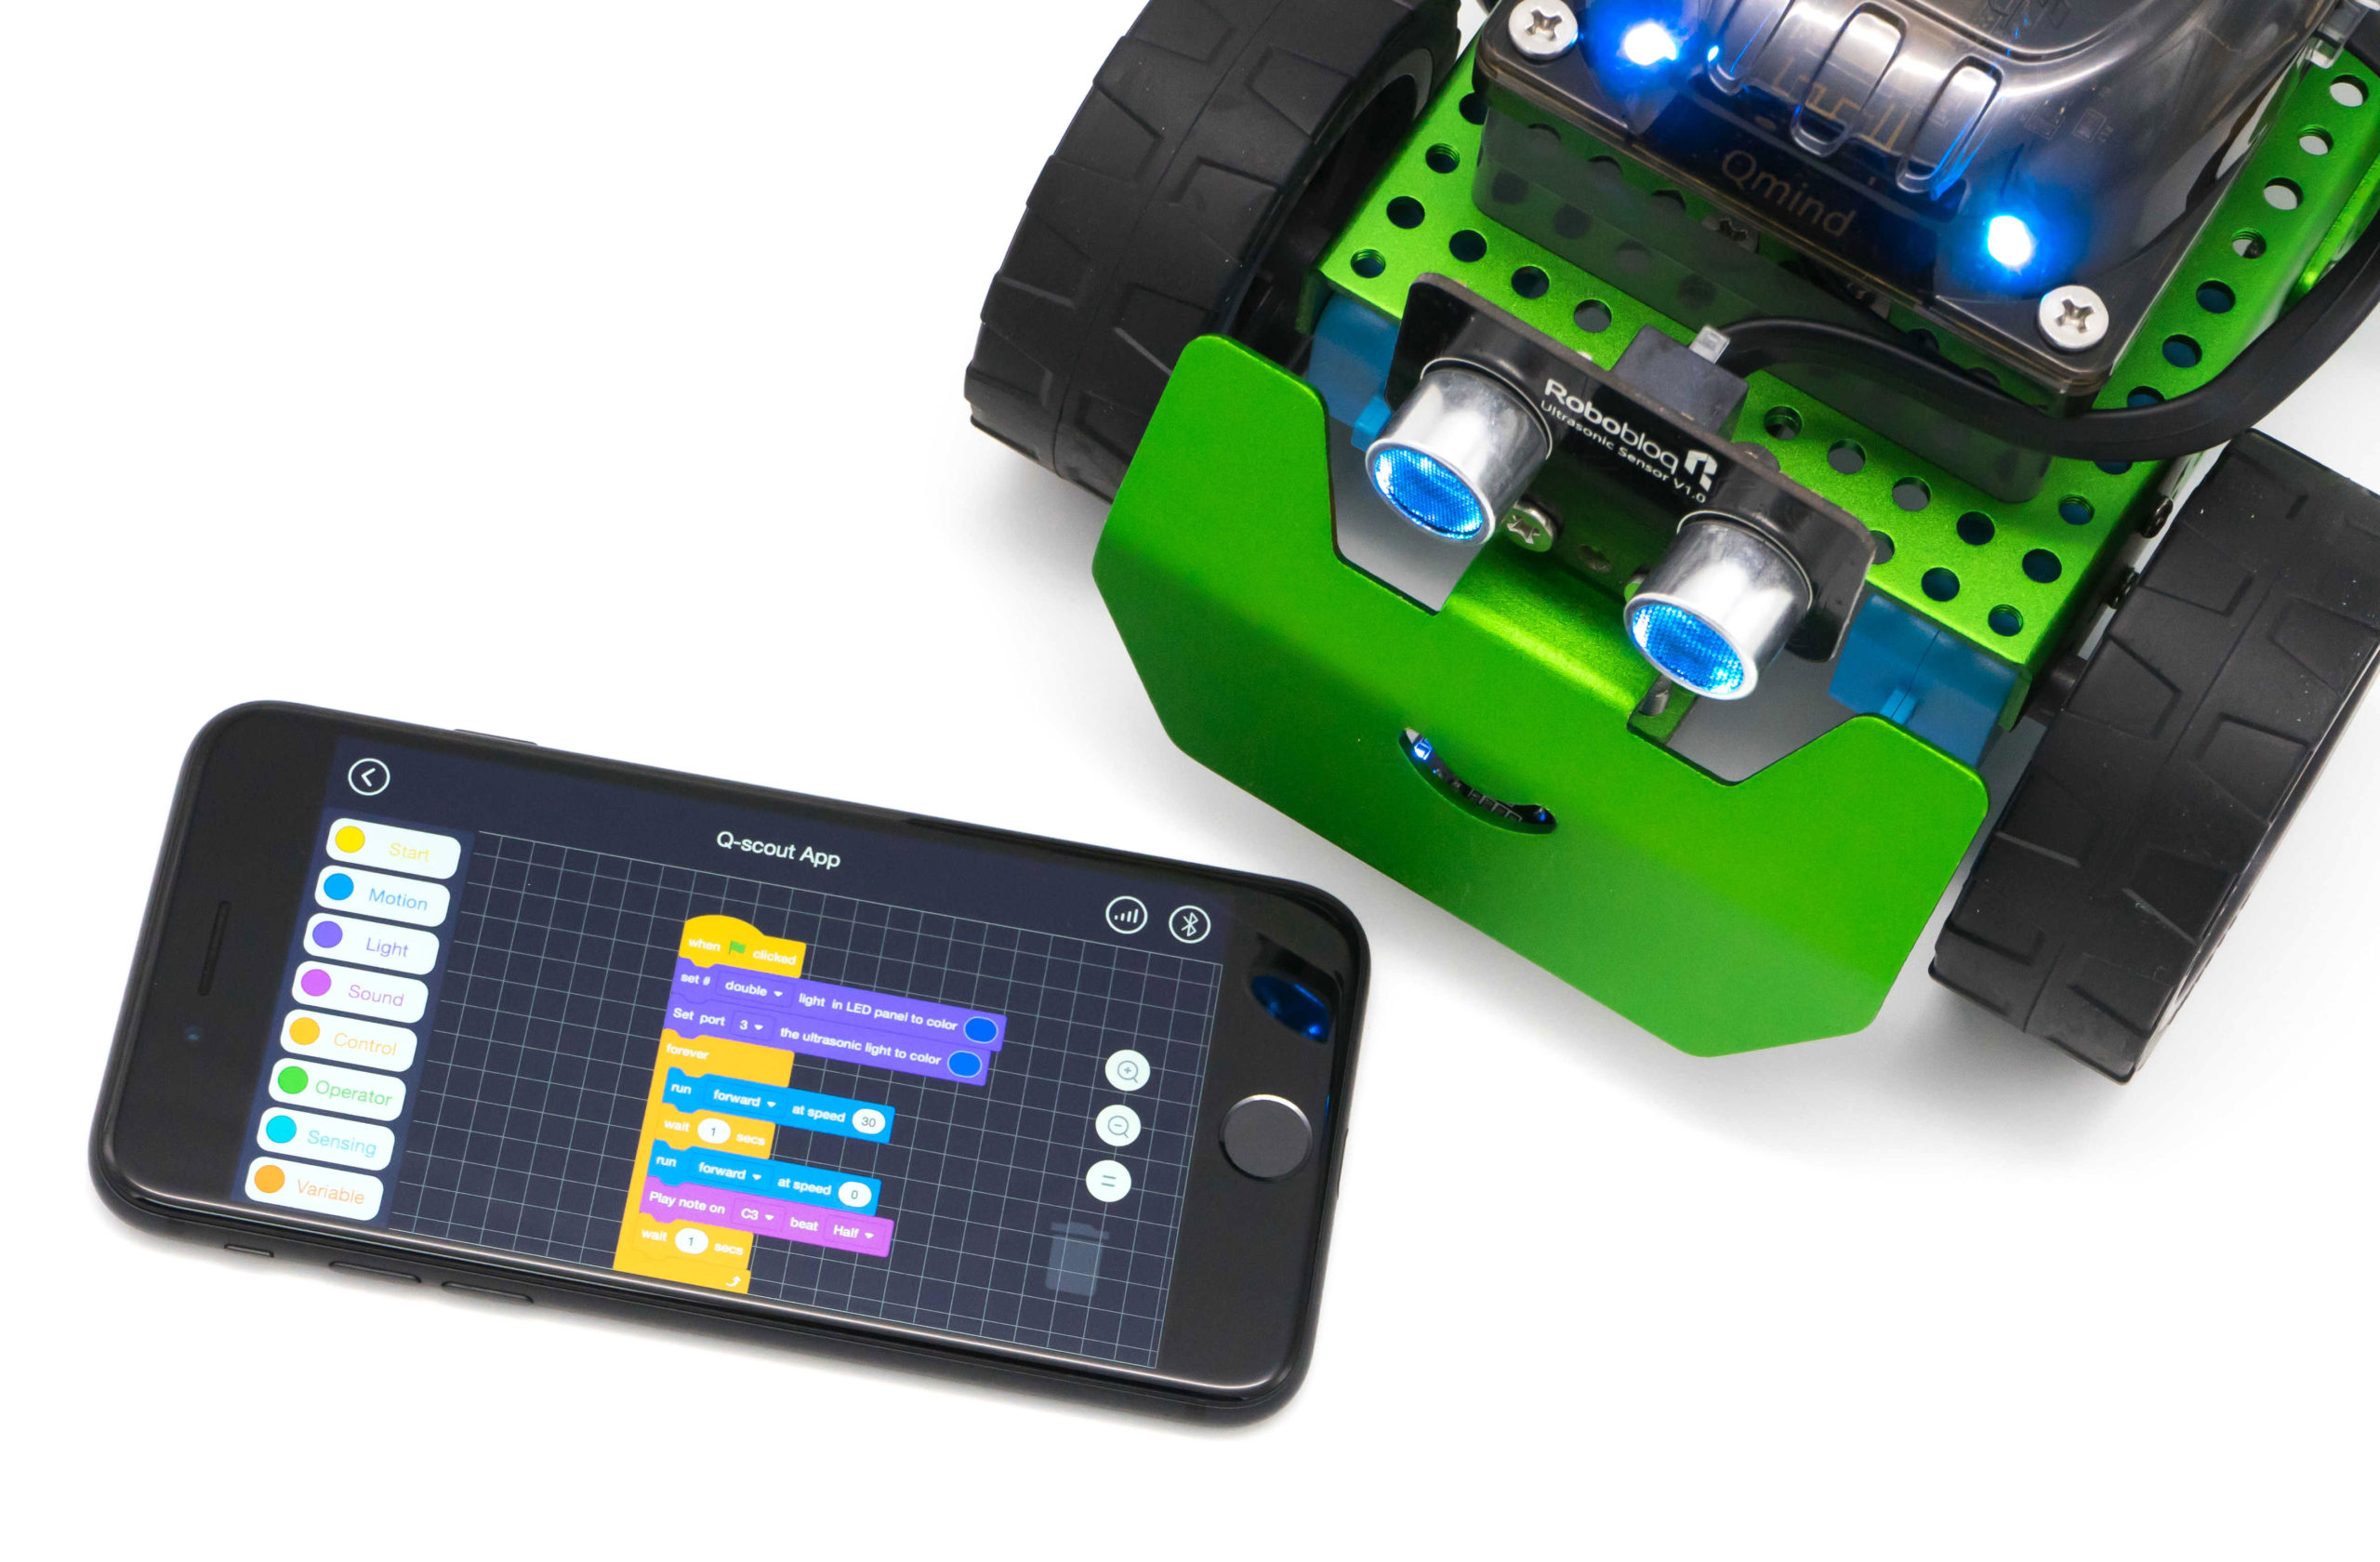 STEM Robot Kit - Robobloq Q-Scout DIY Mechanical Building Robotic Coding  Kit with Remote Control forTeens - RobotShop